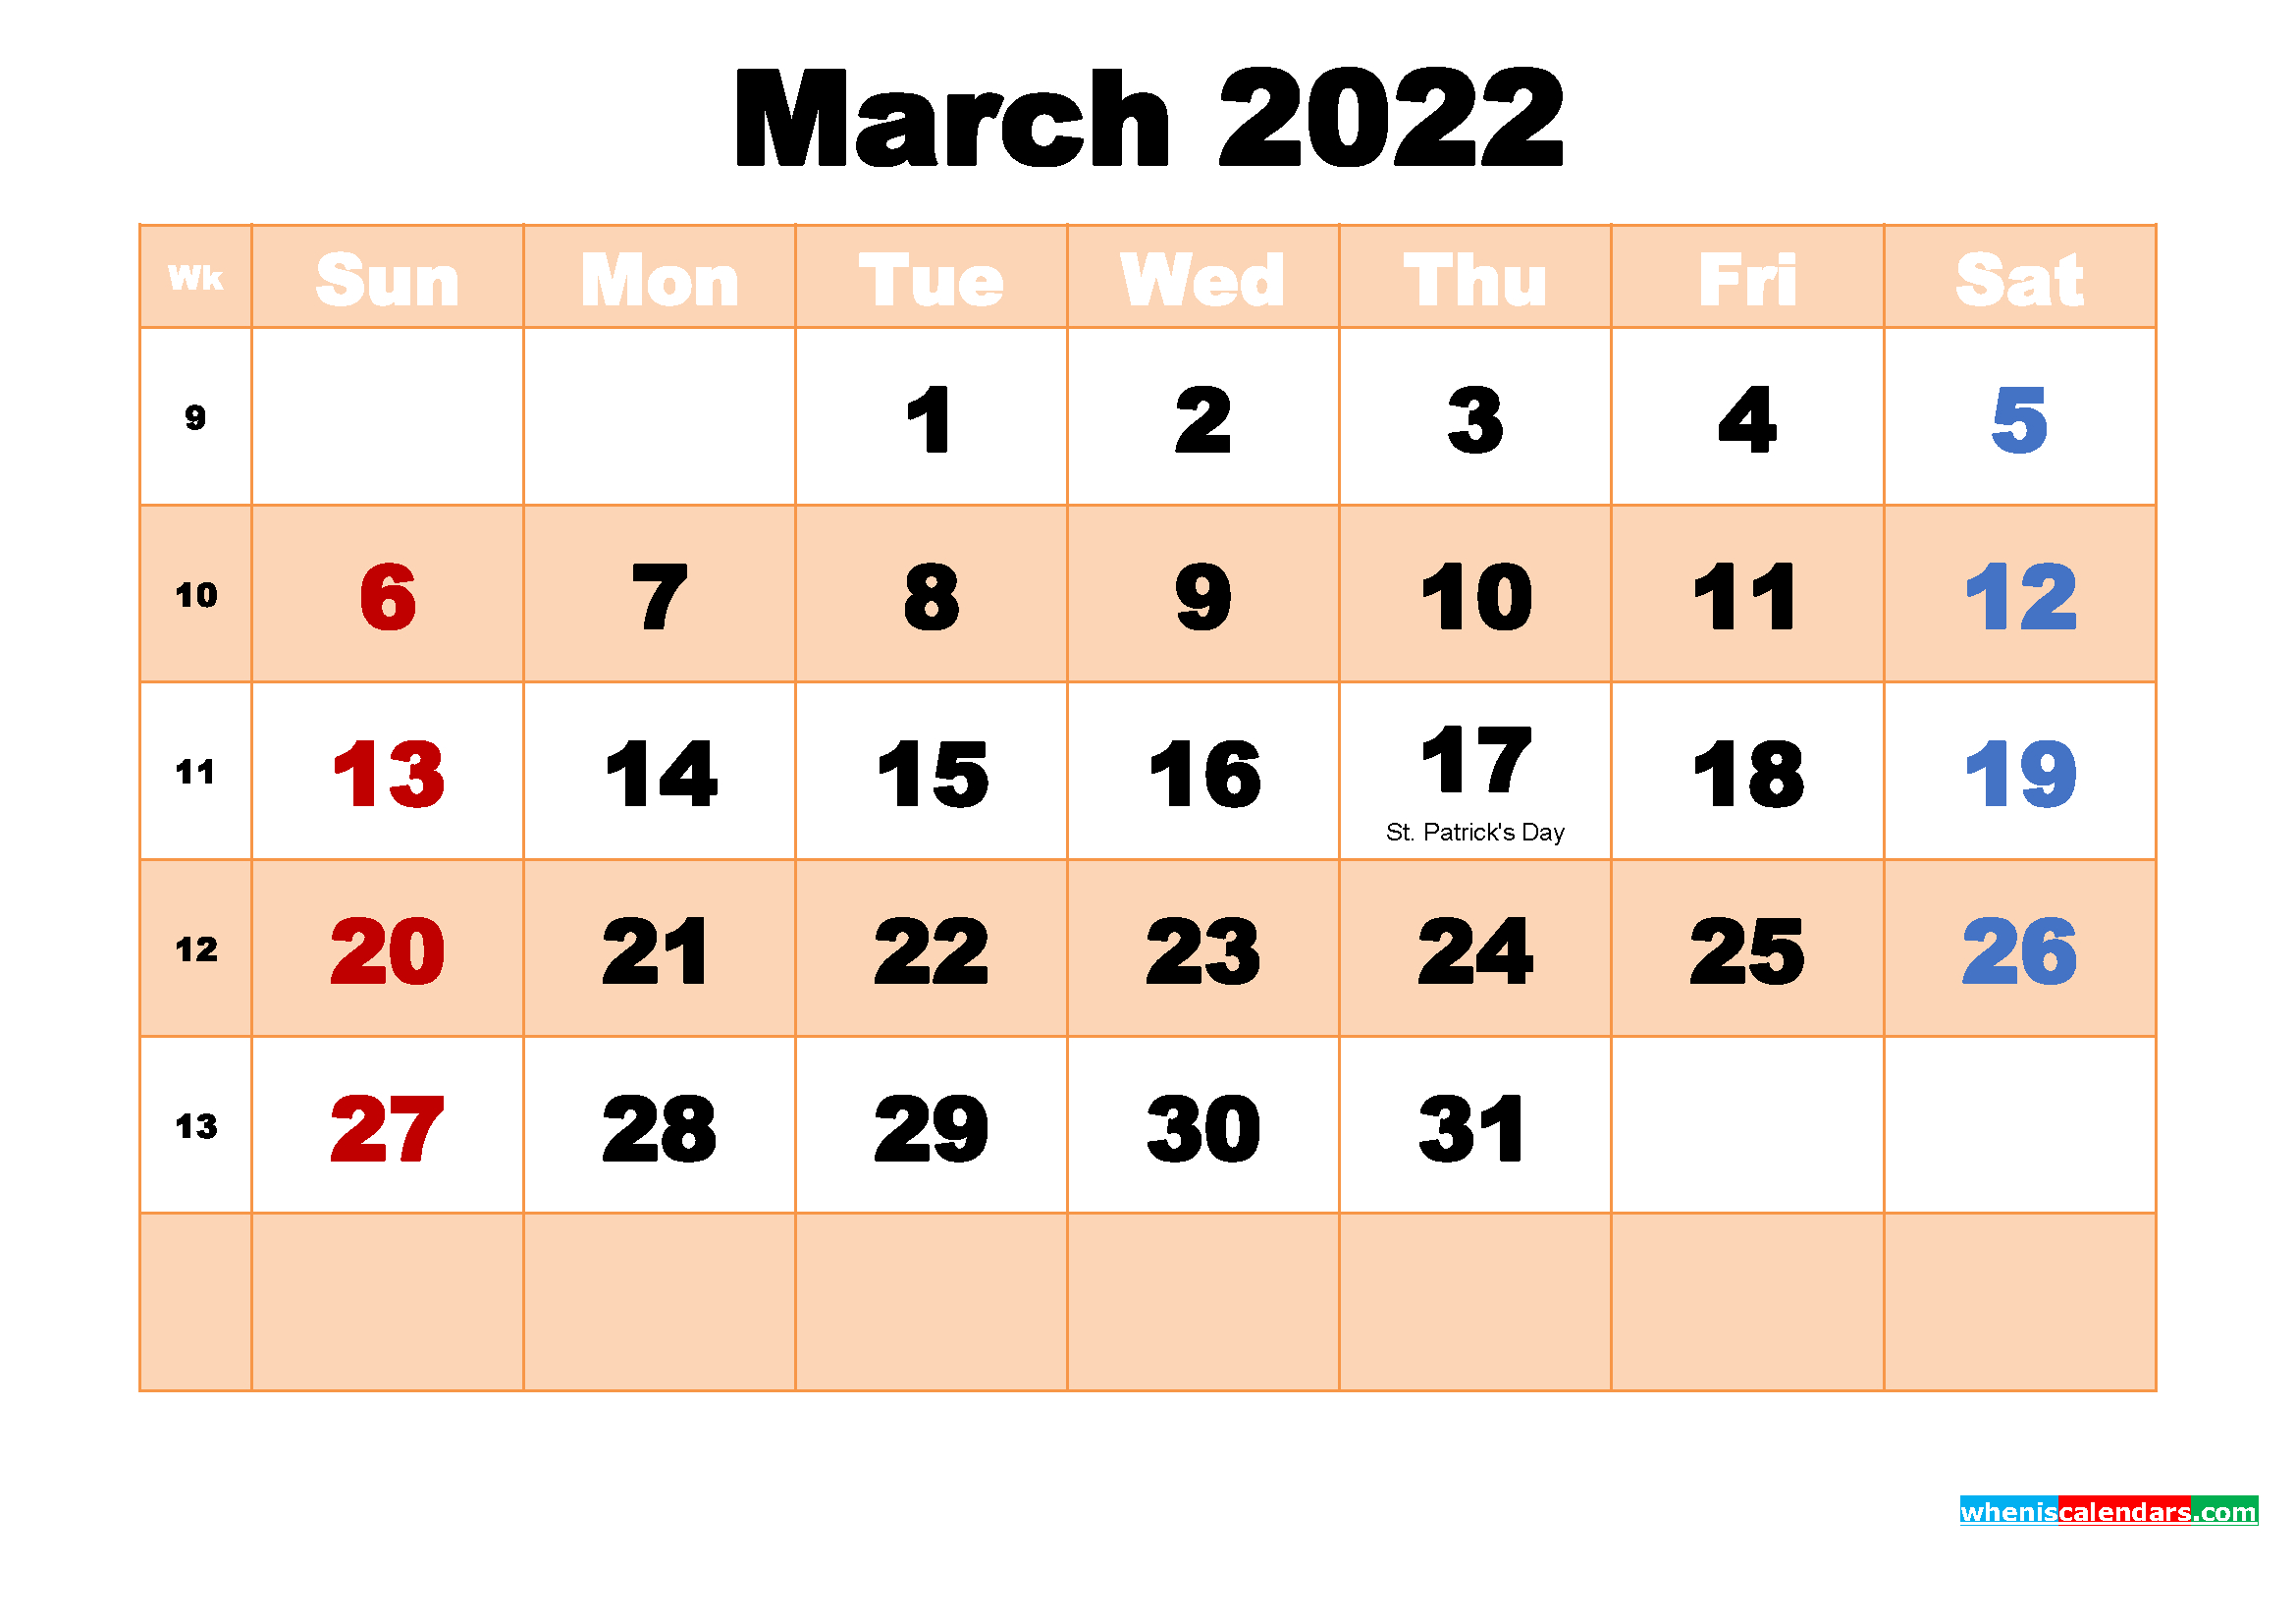 March 2022 Calendar With Holidays Wallpaper for 2022 Desk Top Calendar Free